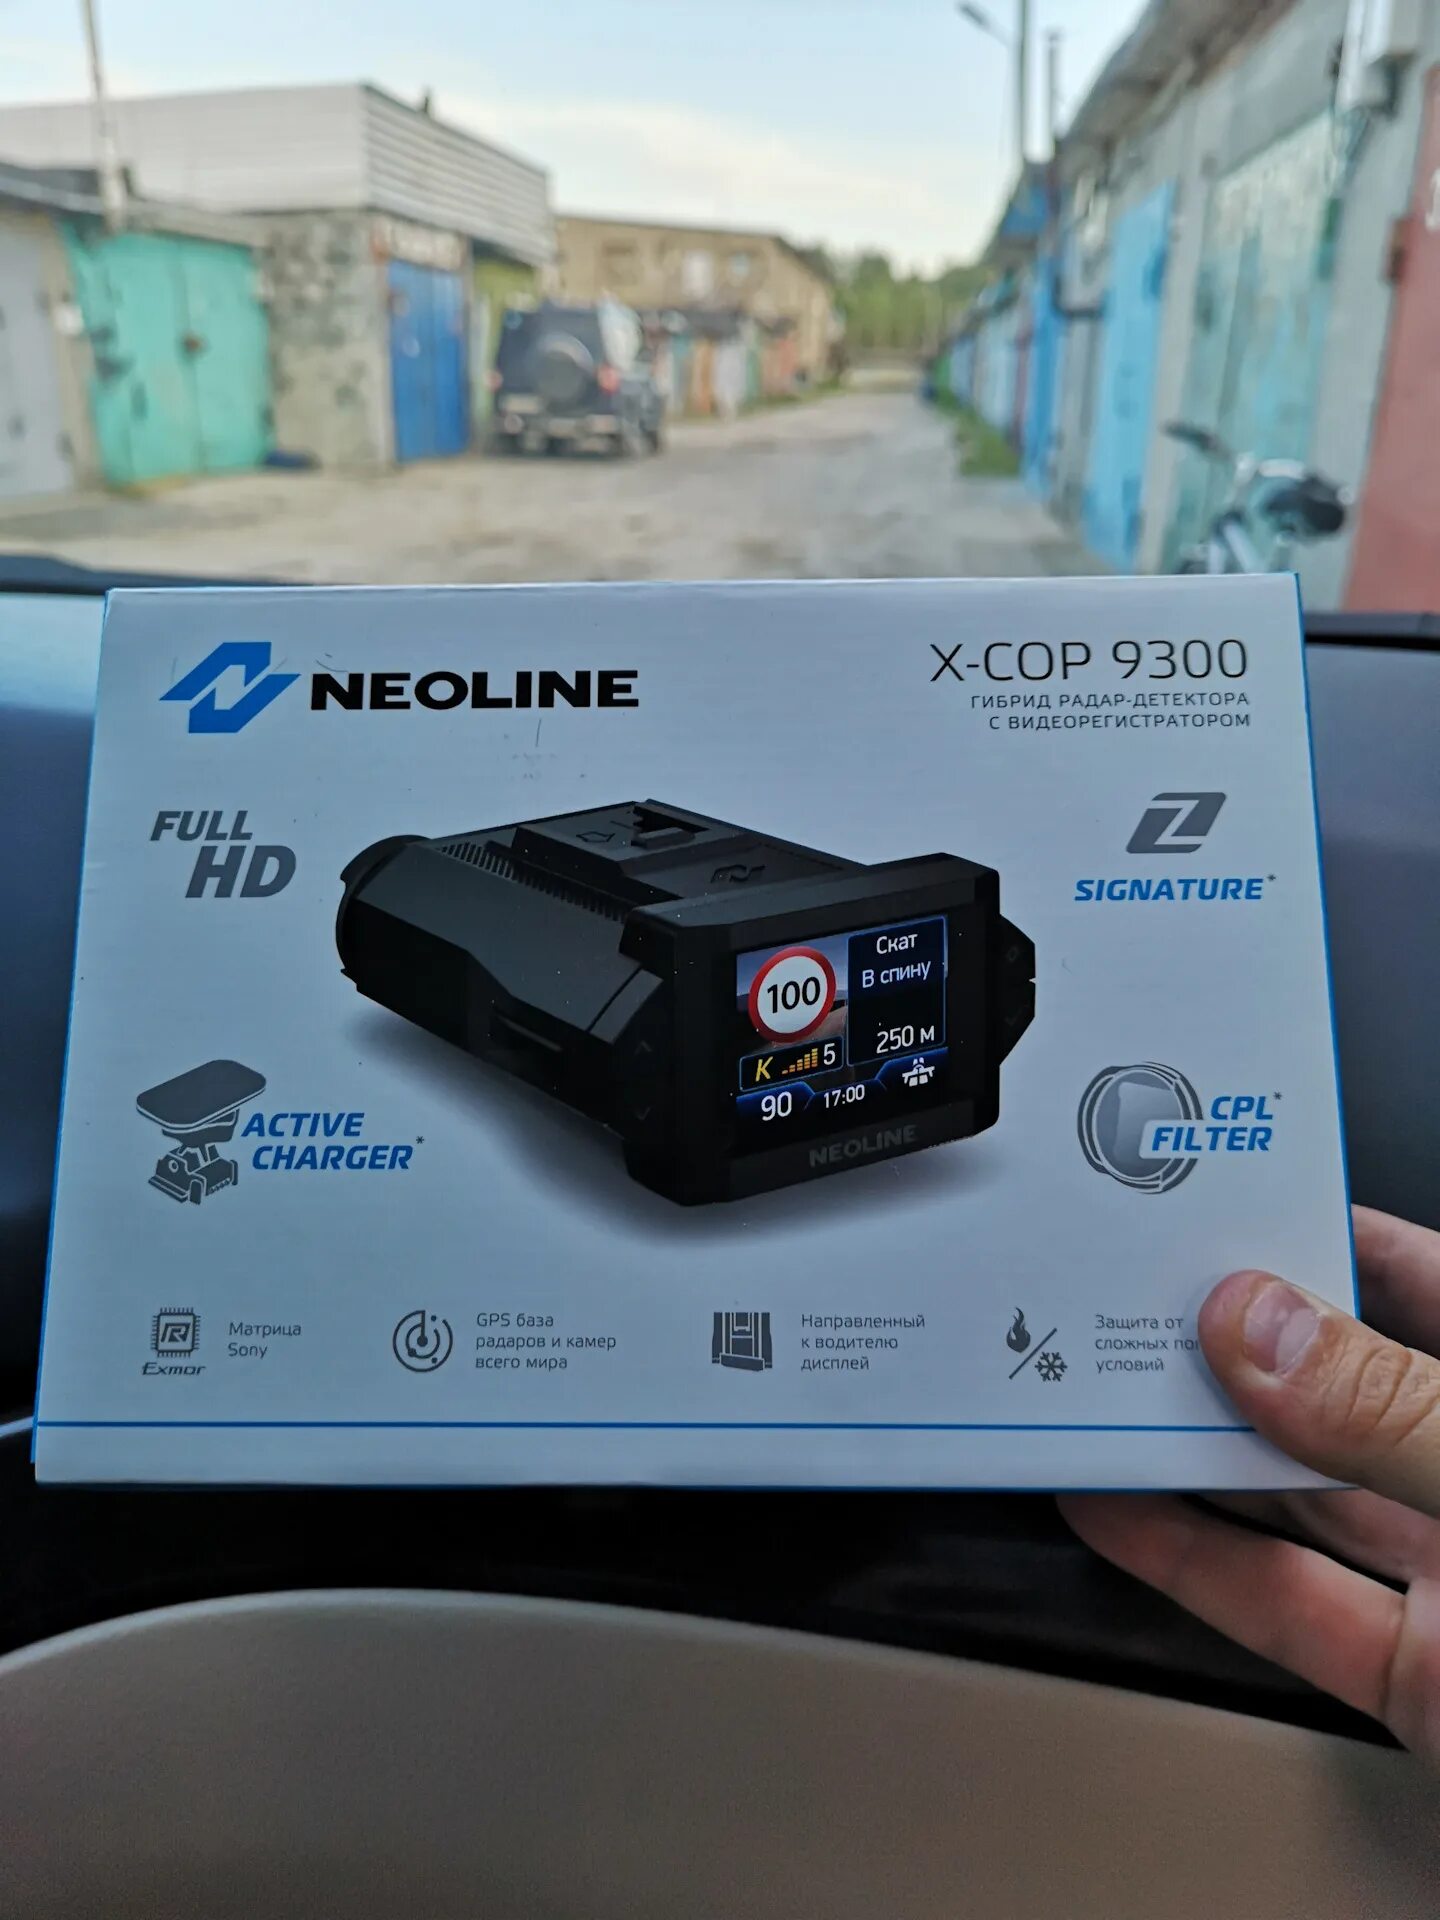 Neoline x cop гибрид. Антирадар Неолайн 9300. Neoline x-cop 9300с. Видеорегистратор Neoline x-cop 9300. Гибрид Neoline x-cop 9300d.